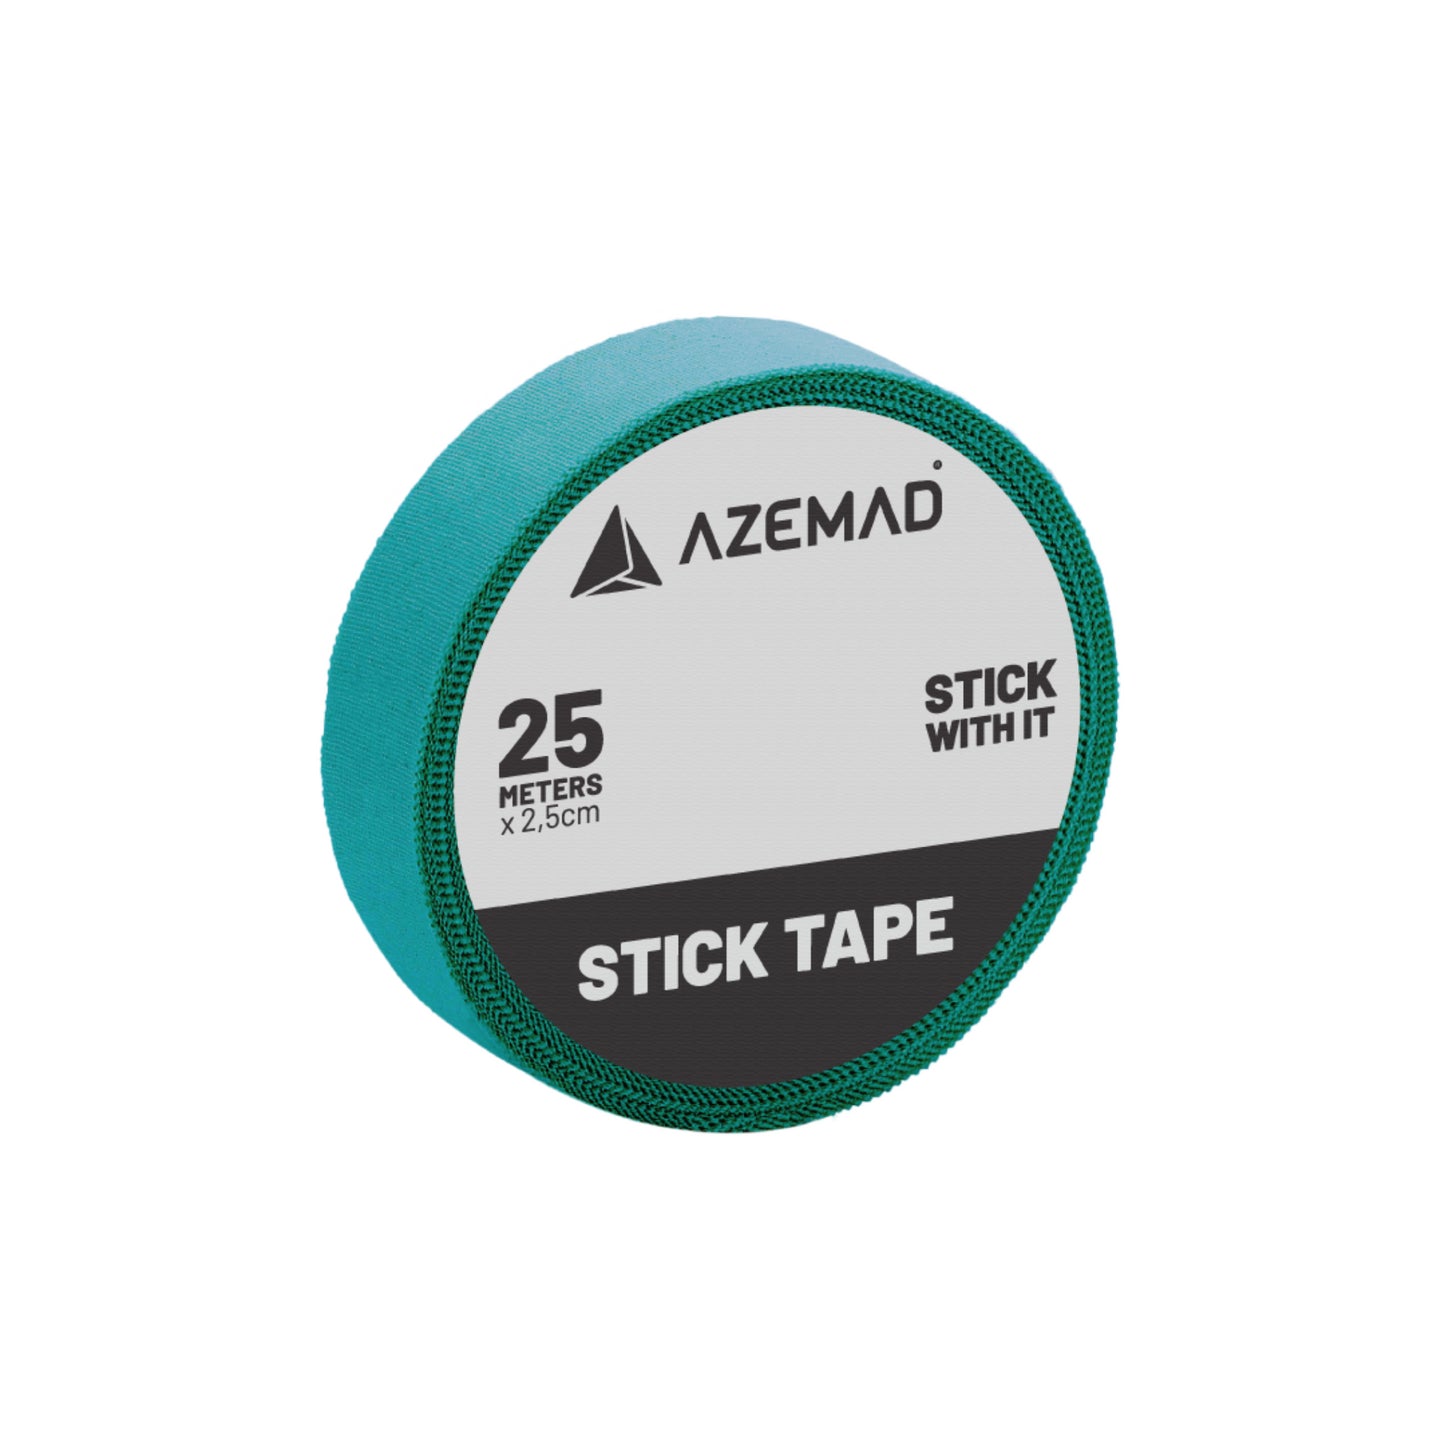 AZEMAD Cintas Tape para Stick (25m)